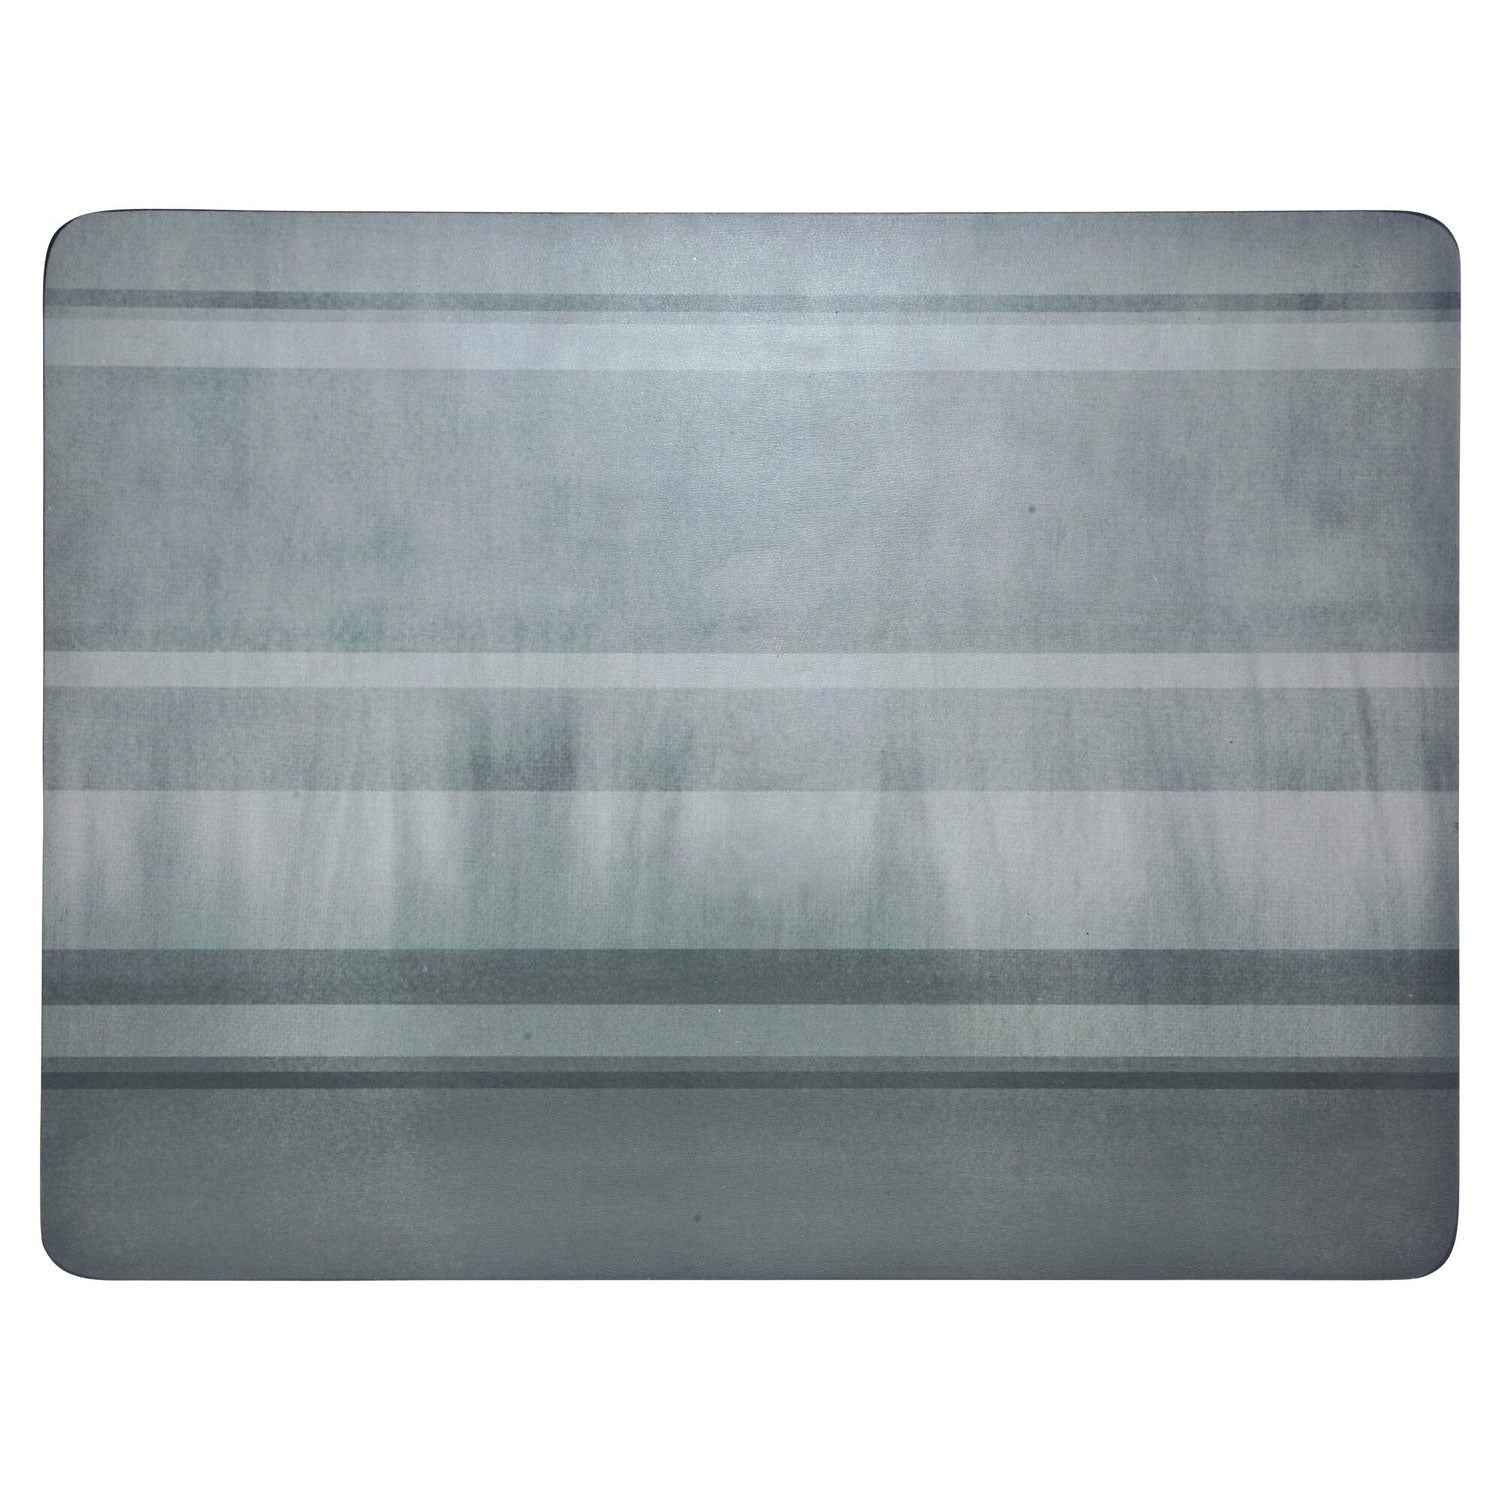 Grey Placemats Set of 6 - Grey